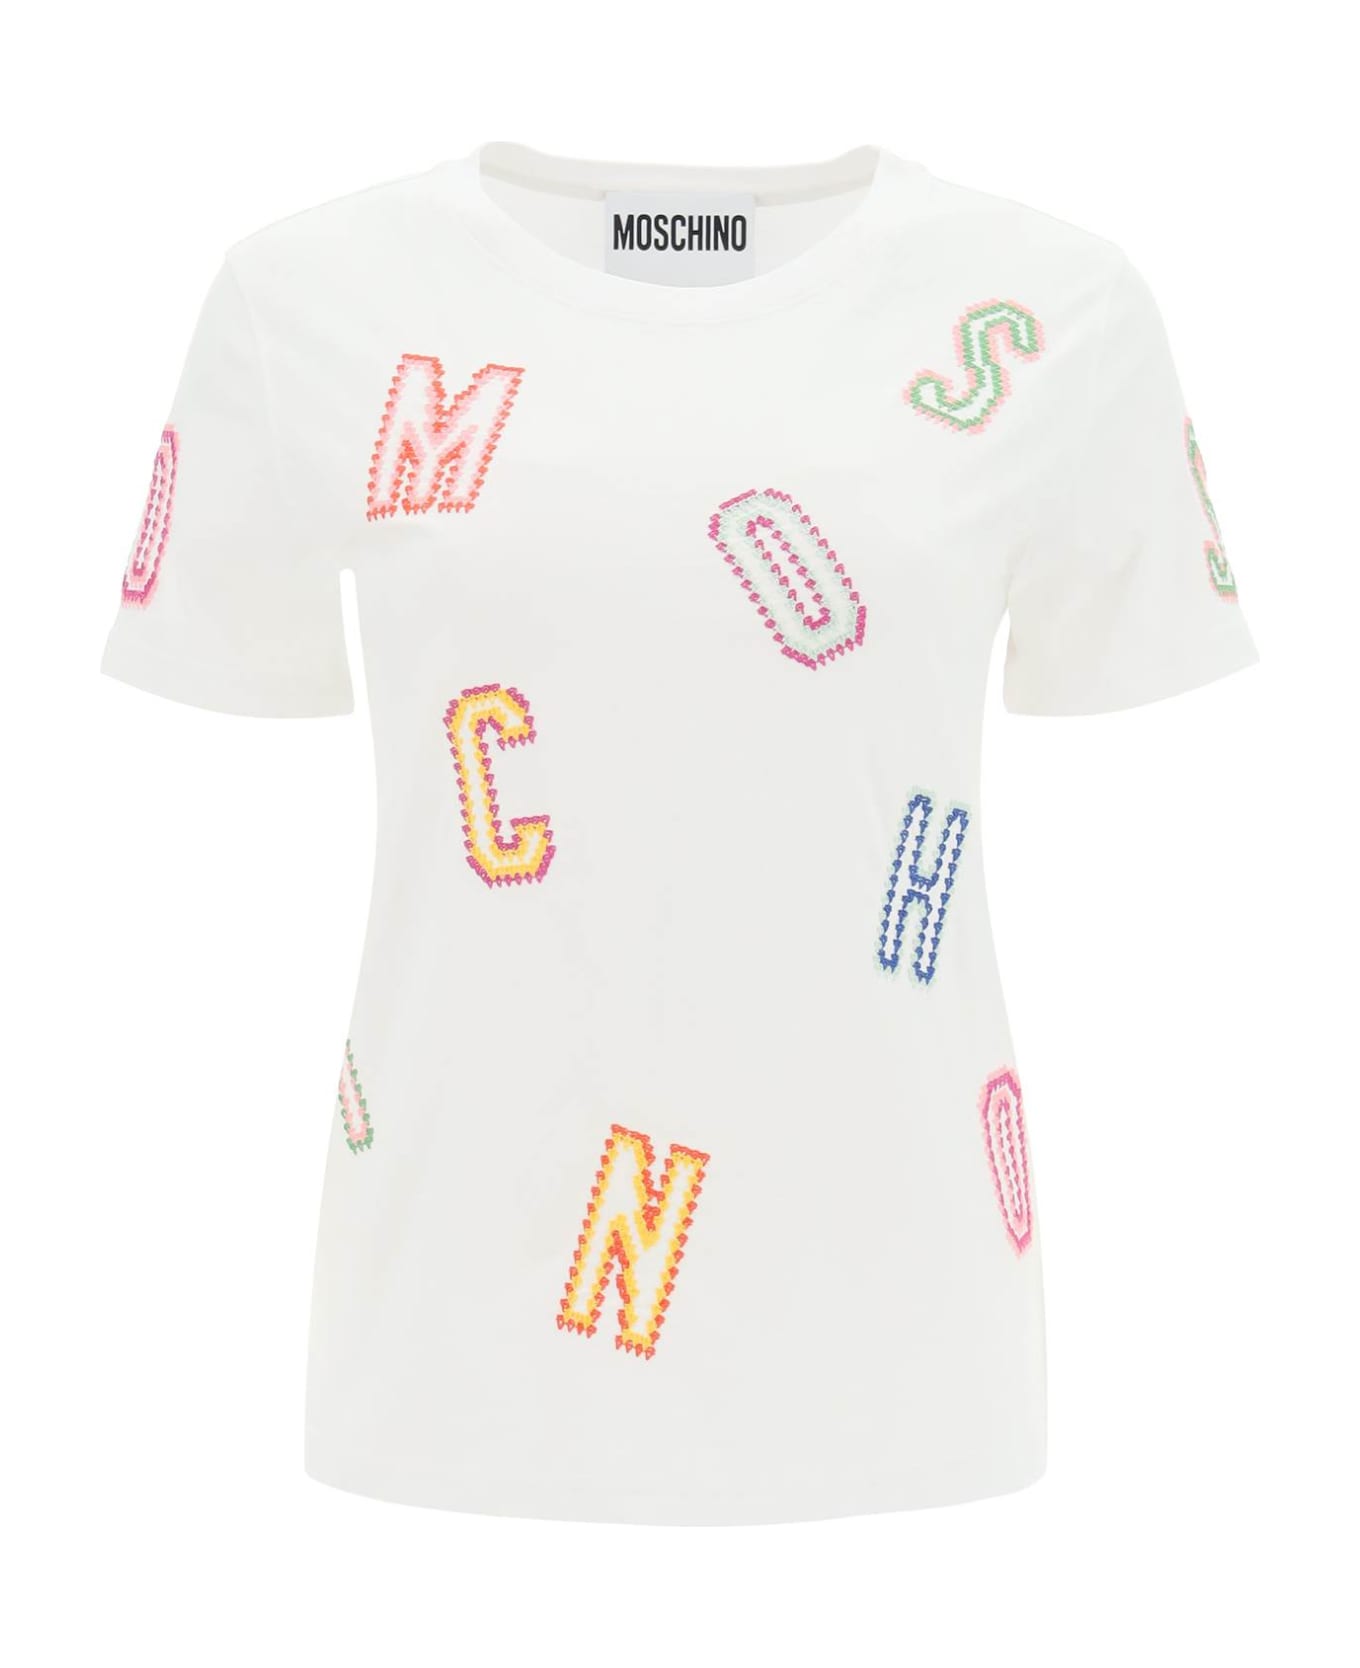 Moschino Embroidered T-shirt - FANTASIA BIANCO (White)